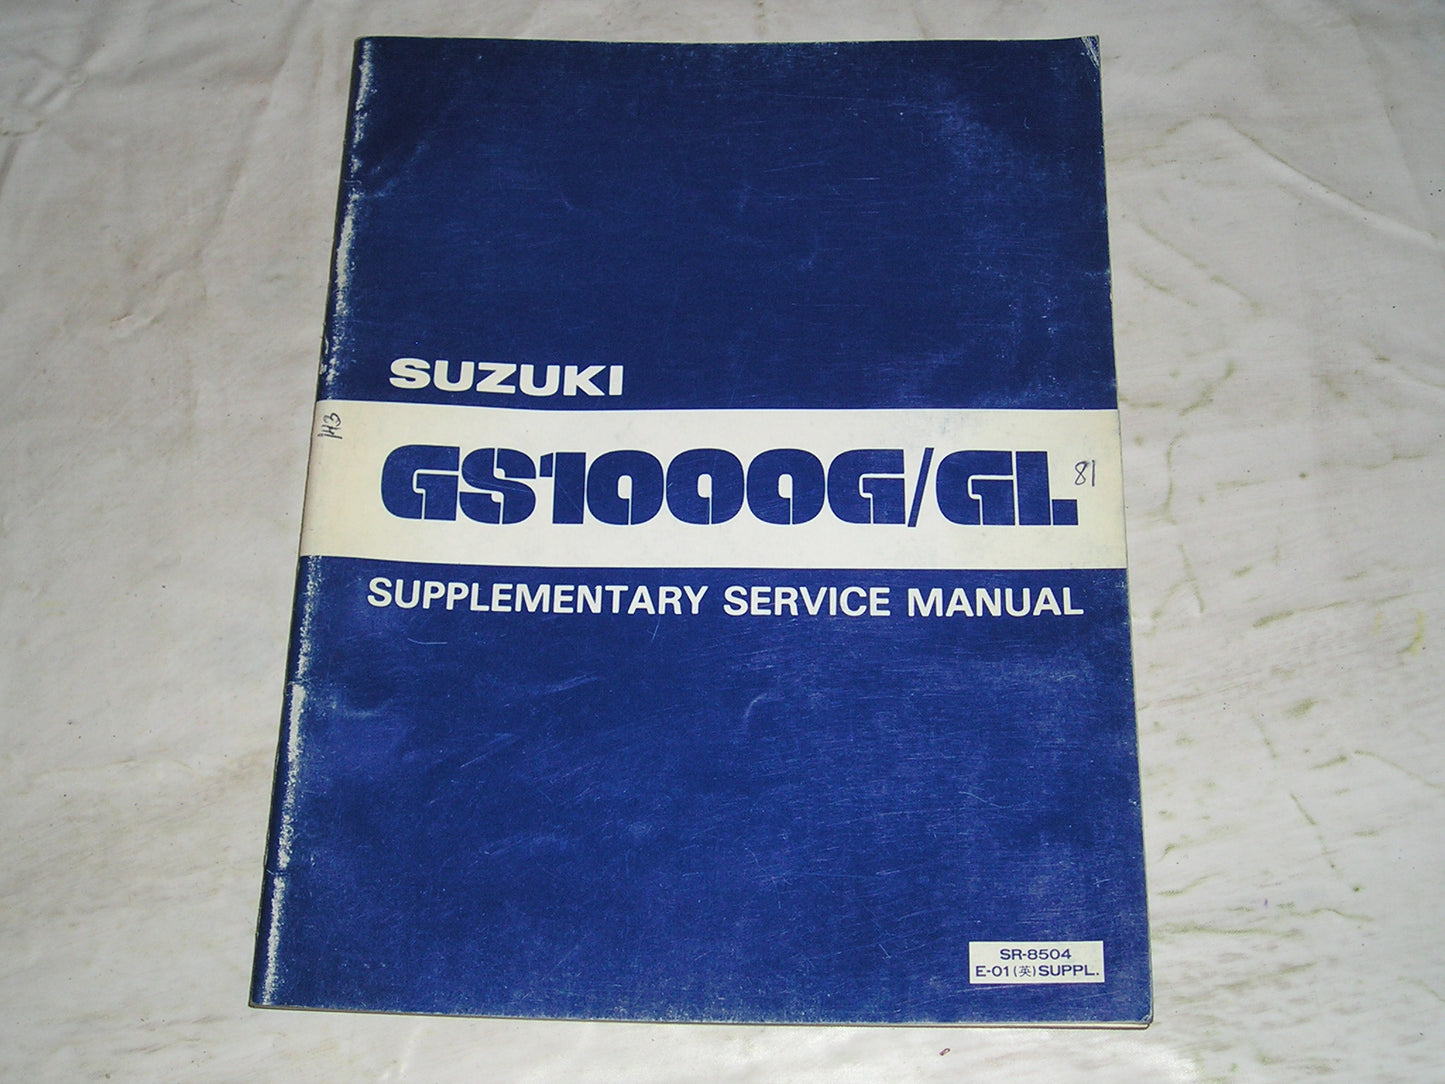 SUZUKI GS1000G X  &  GS1000GL X 1981 Service Manual Supplement SR-8504 E-01 SUPPL.  #143